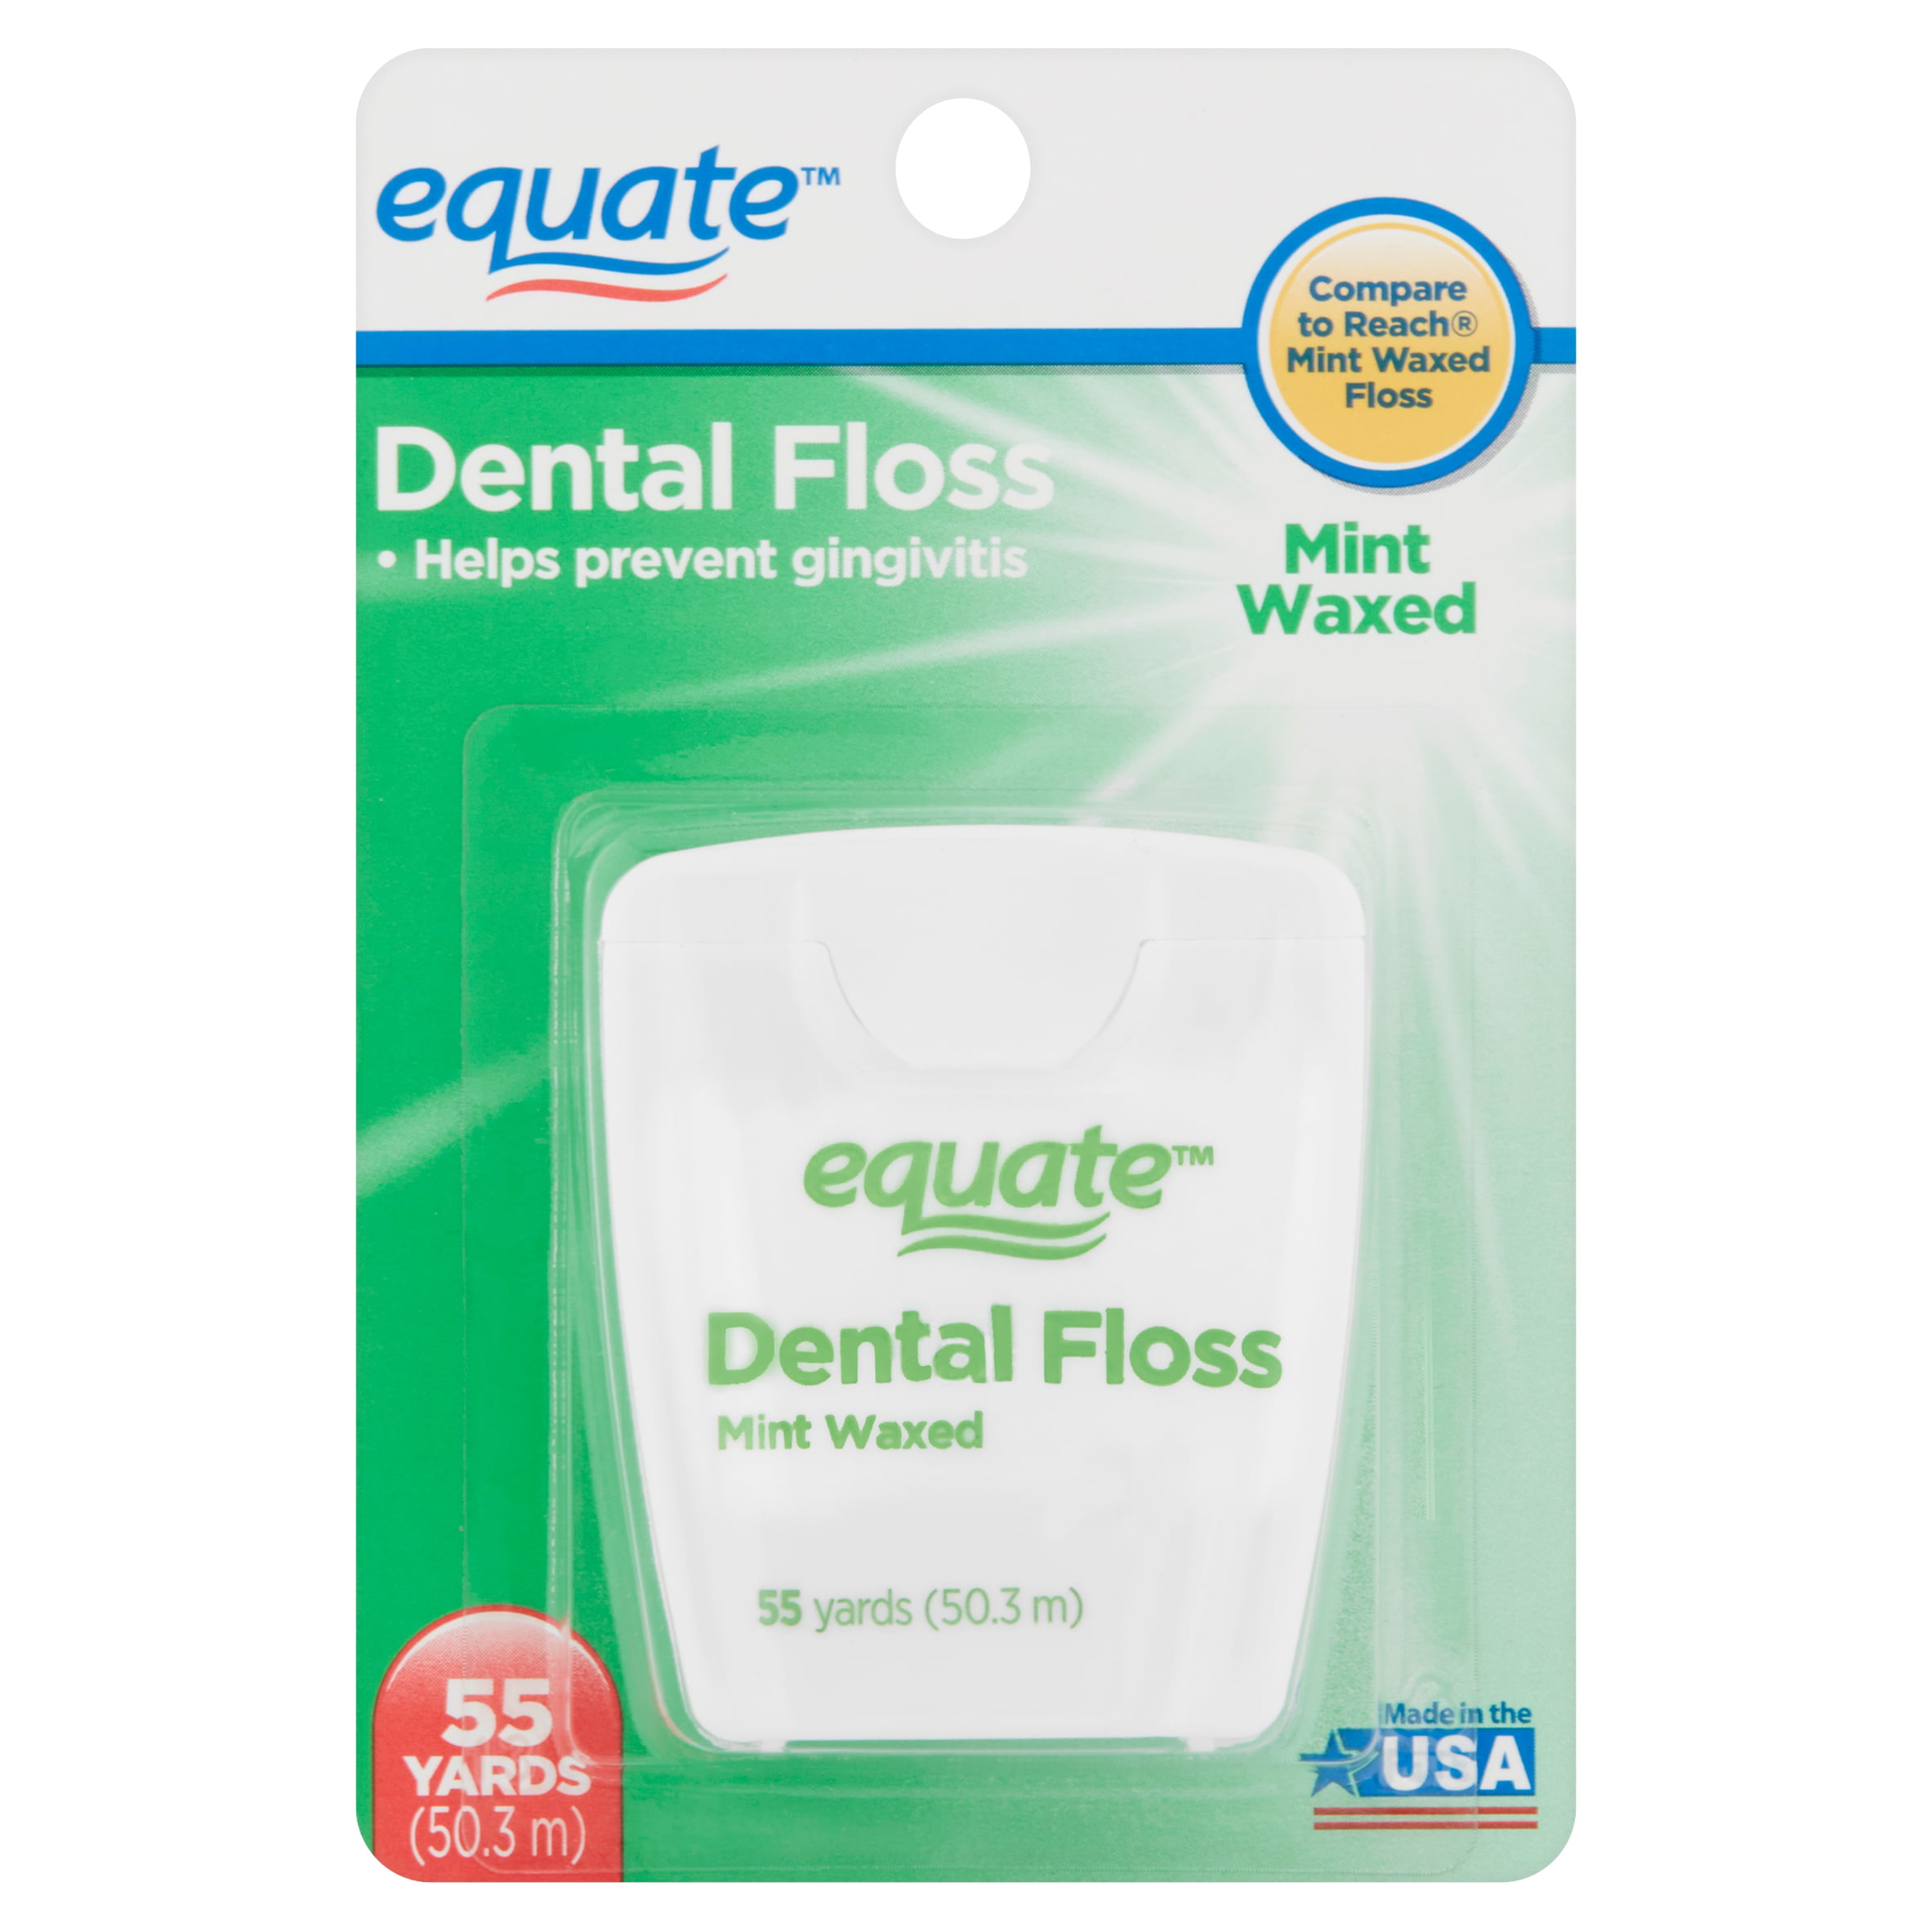 Equate Mint Waxed Dental Floss